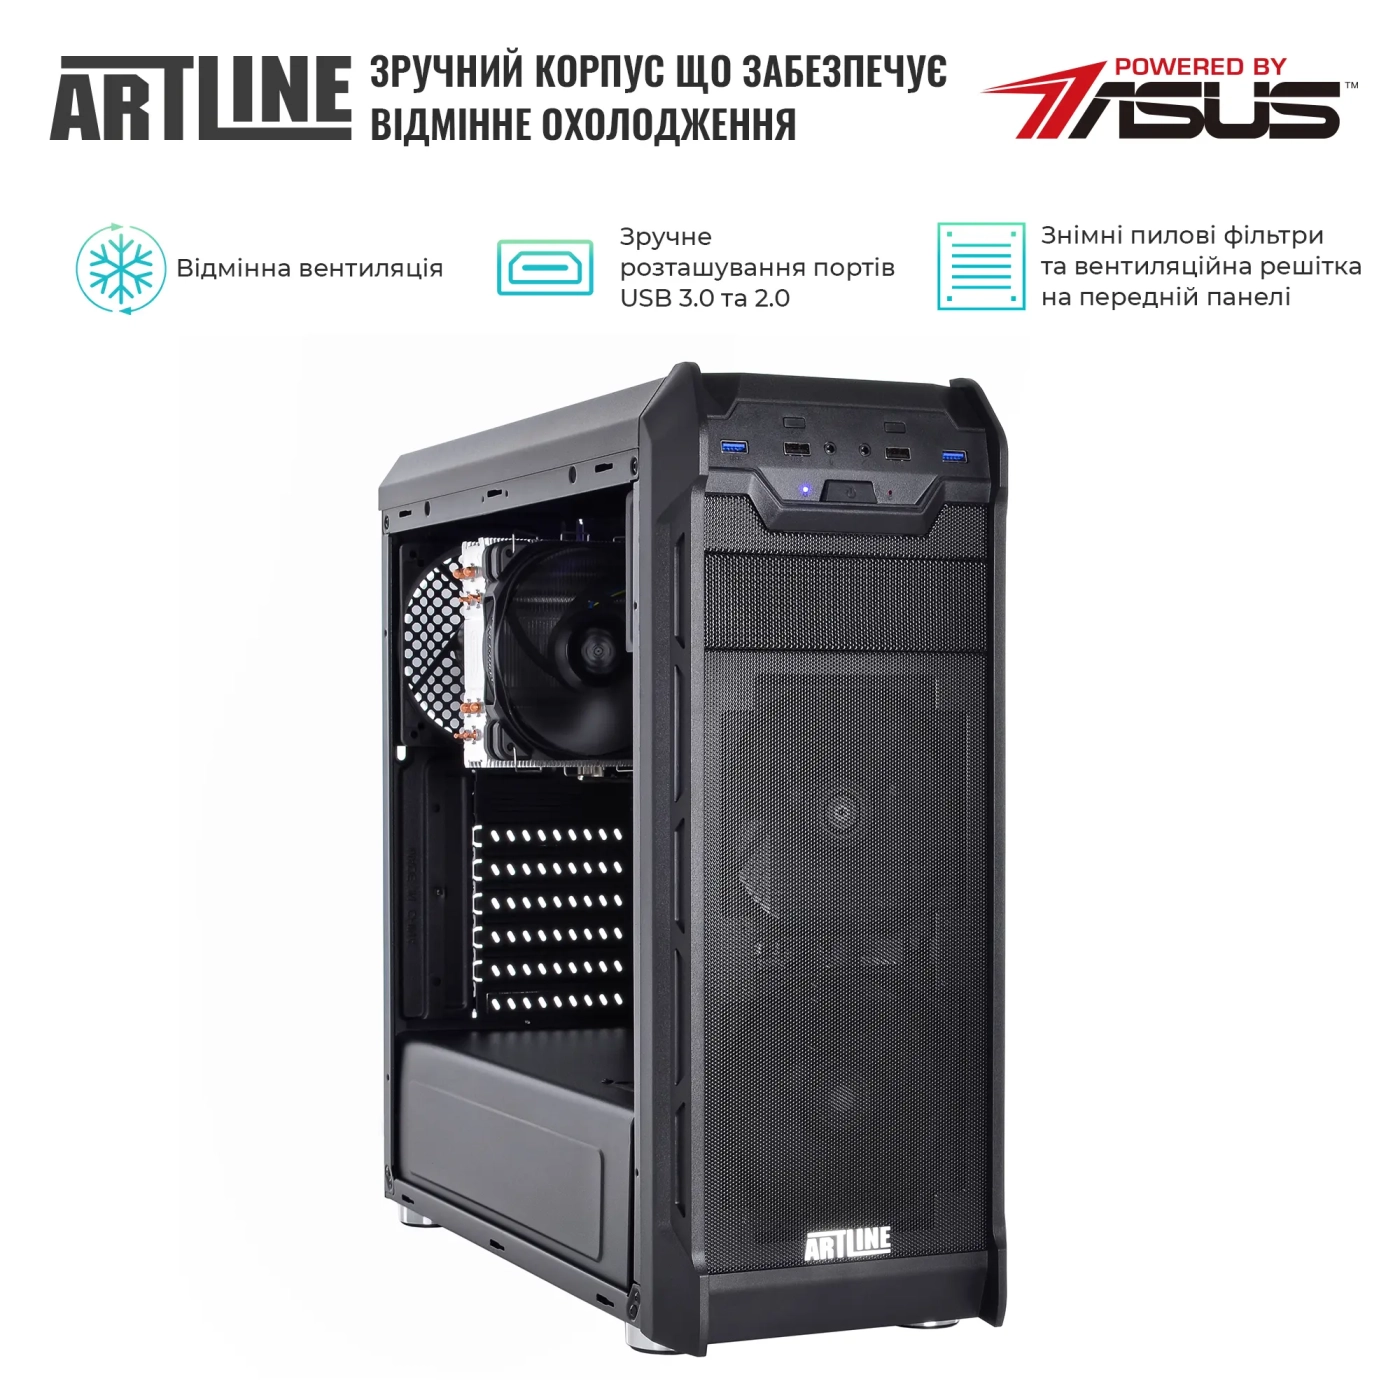 Купити Сервер ARTLINE Business T27 (T27v33) - фото 3